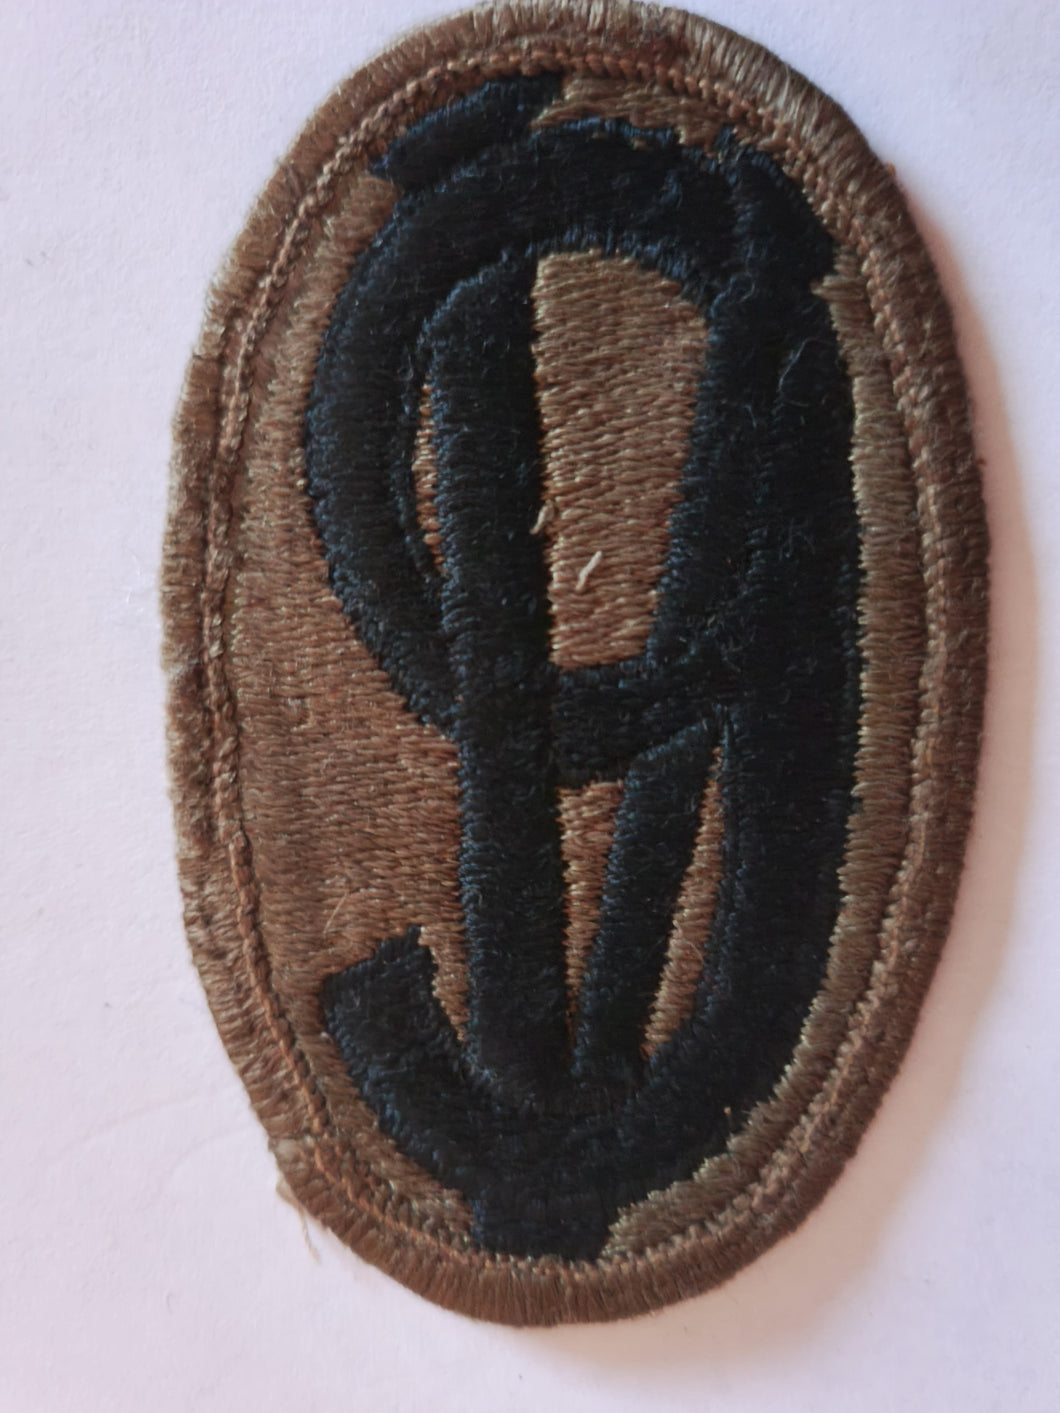 Vietnam War era 95th Infantry Division patch